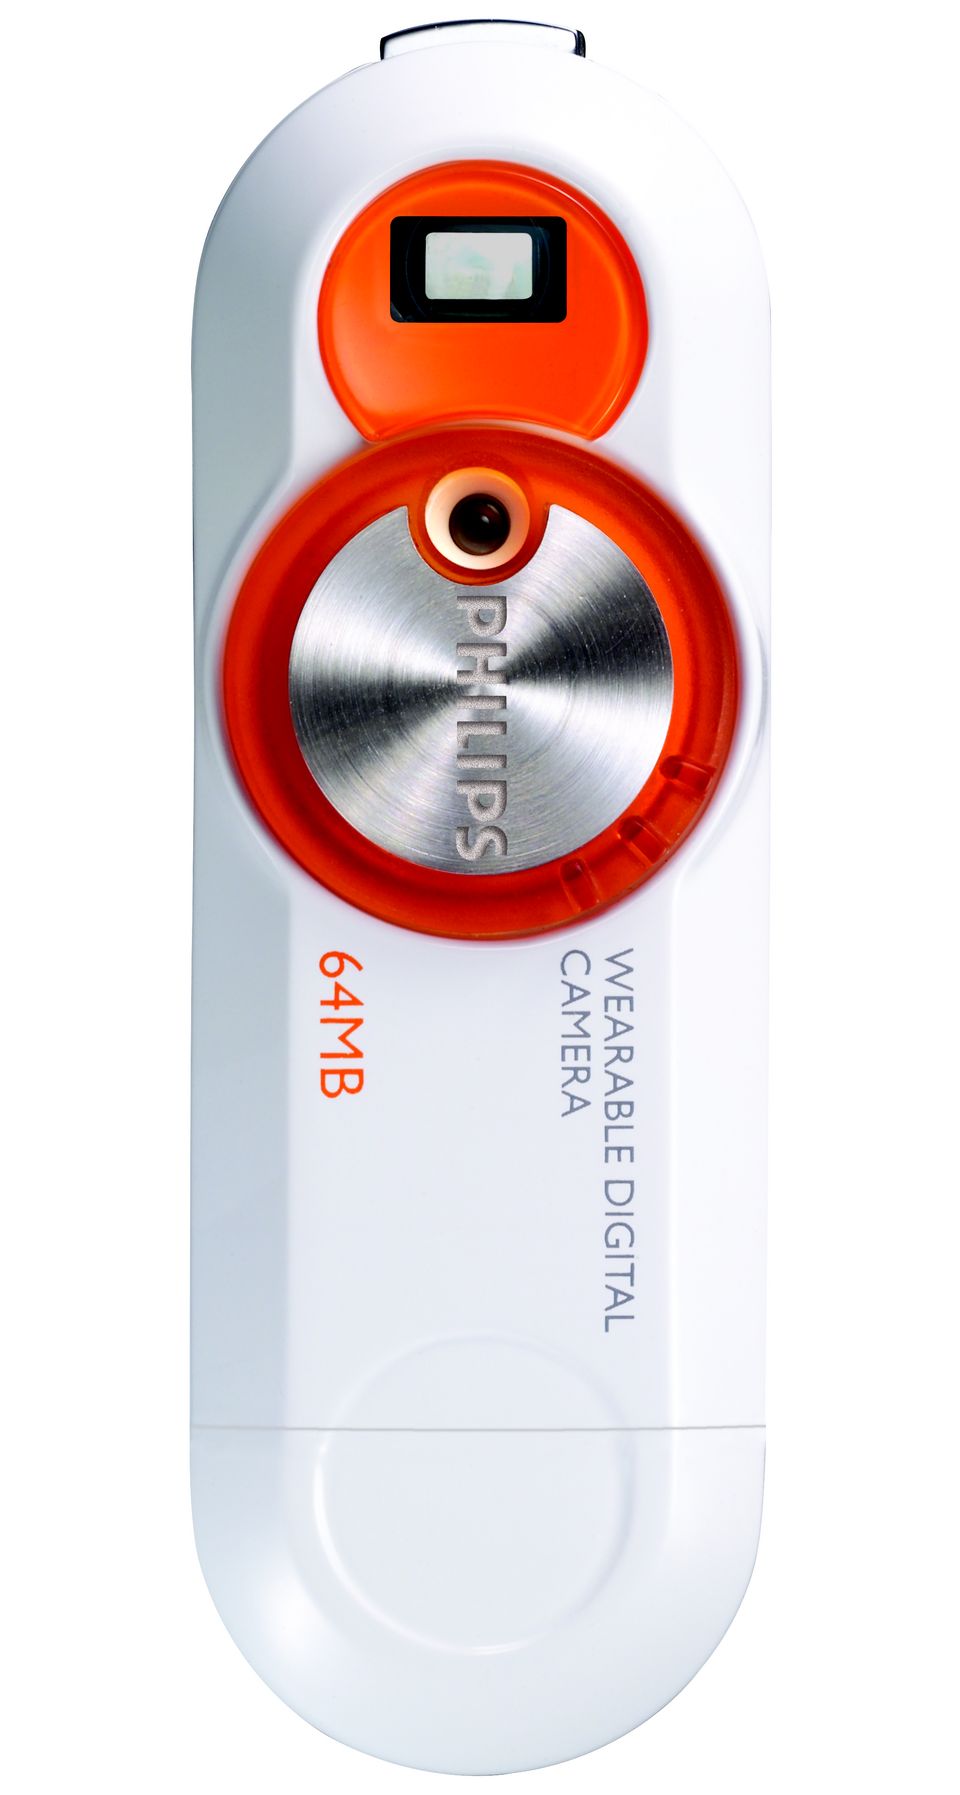 Philips Digital Camera Key Ring Key007 review: Philips Digital Camera Key  Ring Key007 - CNET